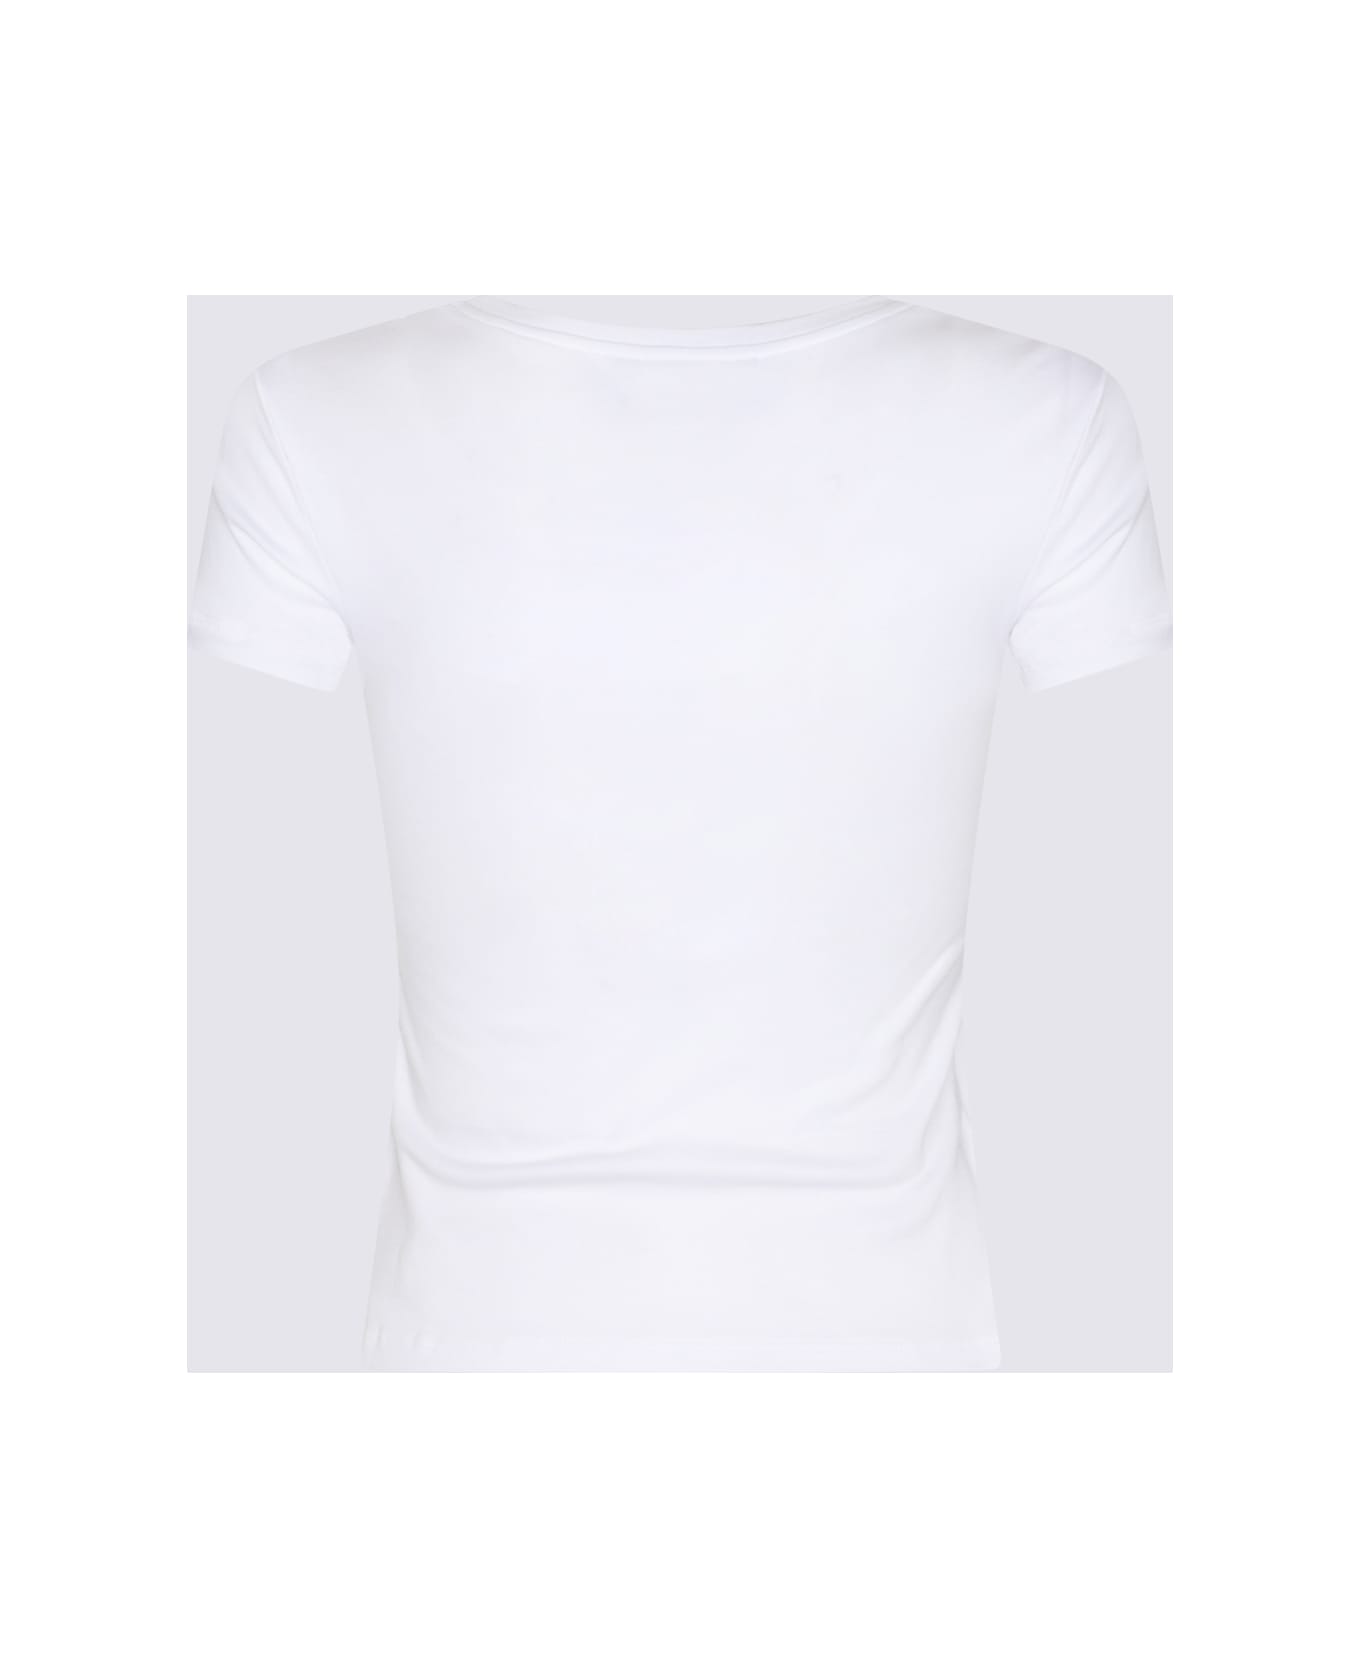 Blumarine White Cotton T-shirt - White